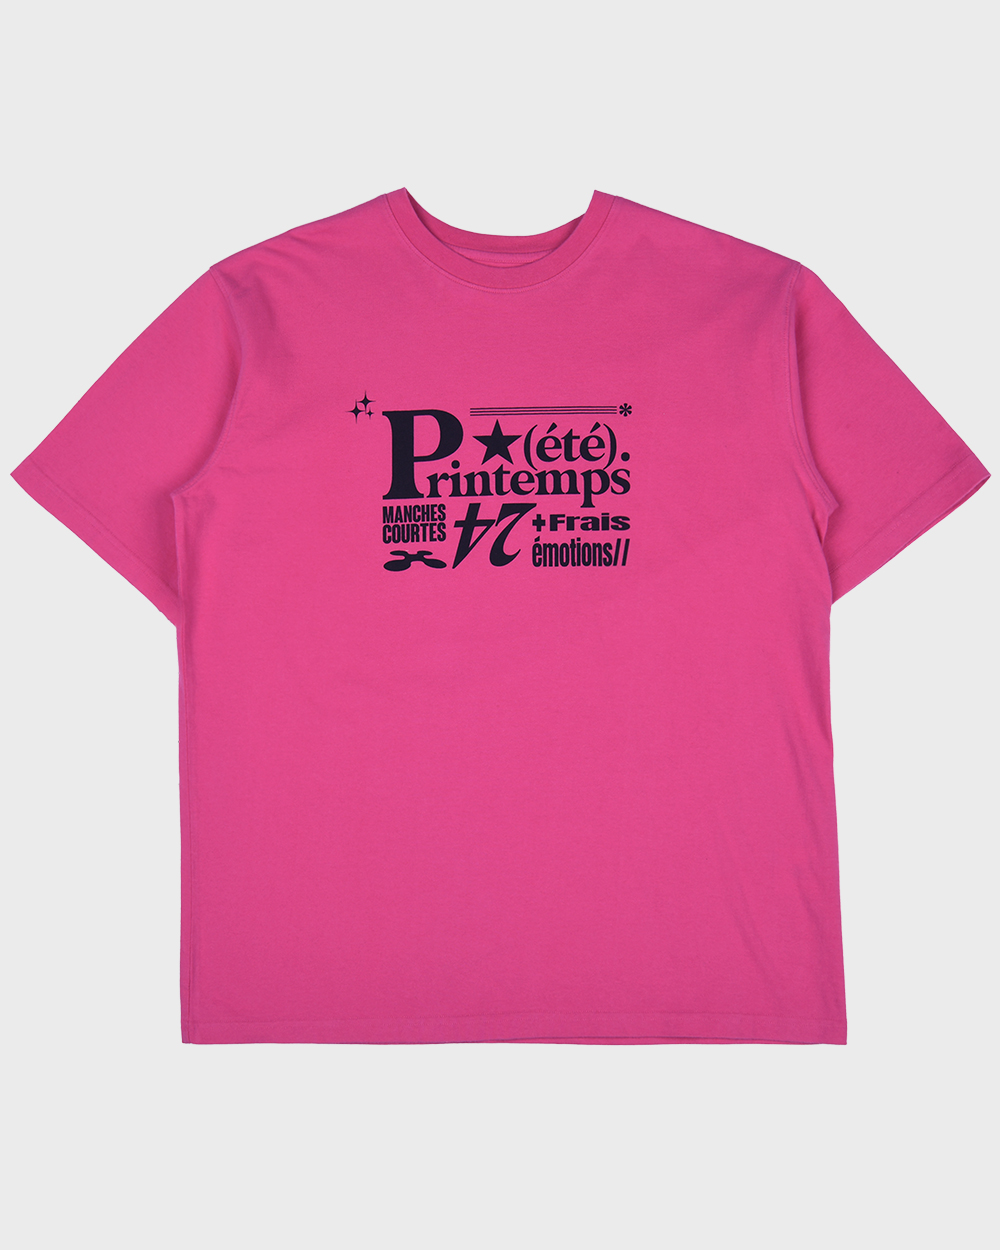 aeae New Typo T-Shirts (Pink)